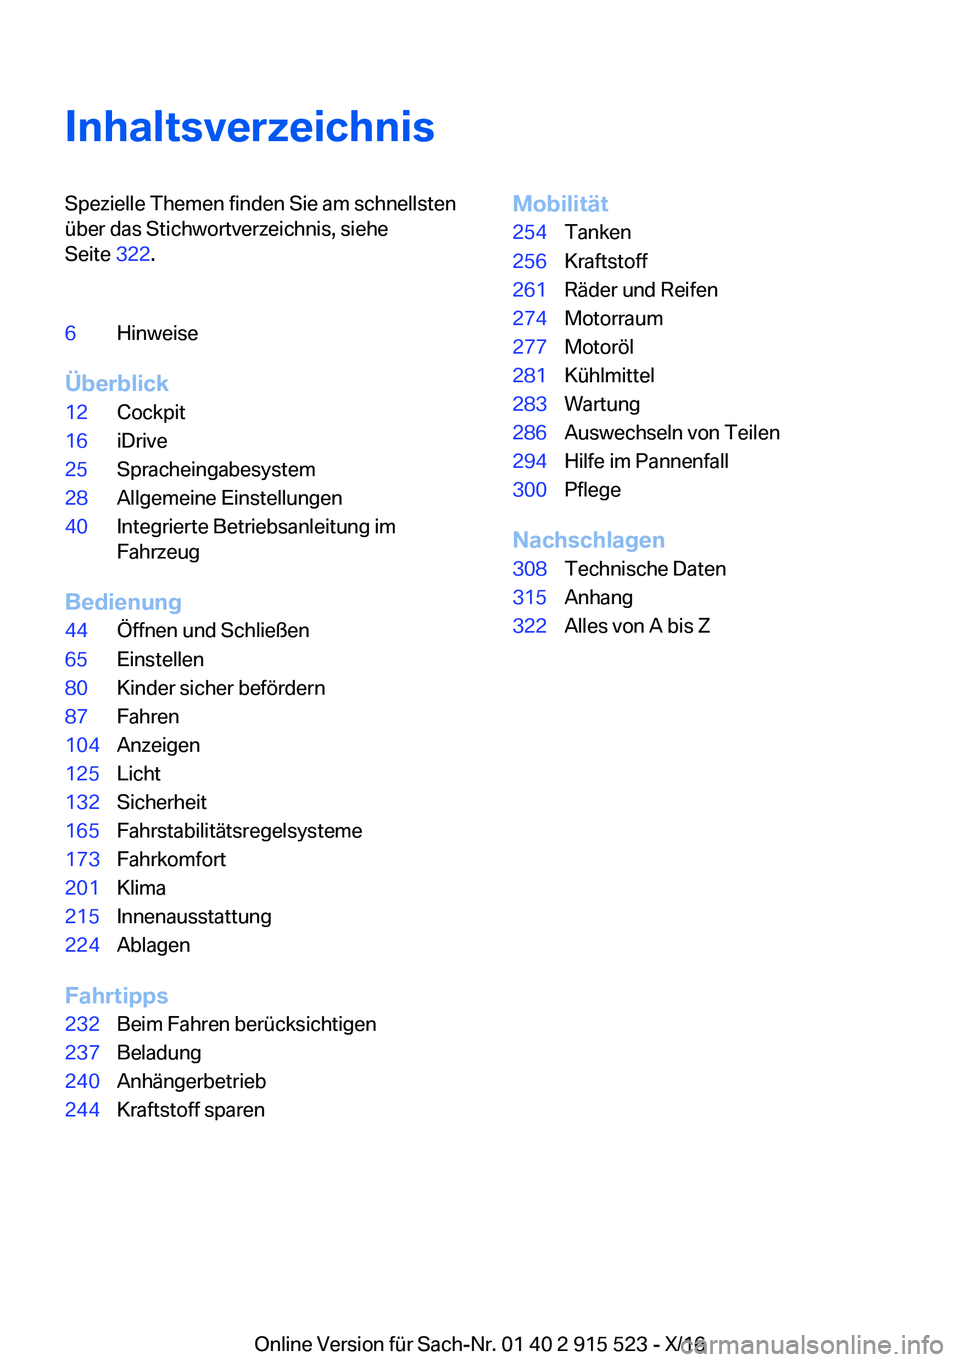 BMW X5 2017  Betriebsanleitungen (in German) �I�n�h�a�l�t�s�v�e�r�z�e�i�c�h�n�i�s�S�p�e�z�i�e�l�l�e� �T�h�e�m�e�n� �f�i�n�d�e�n� �S�i�e� �a�m� �s�c�h�n�e�l�l�s�t�e�n
�ü�b�e�r� �d�a�s� �S�t�i�c�h�w�o�r�t�v�e�r�z�e�i�c�h�n�i�s�,� �s�i�e�h�e
�S�e�